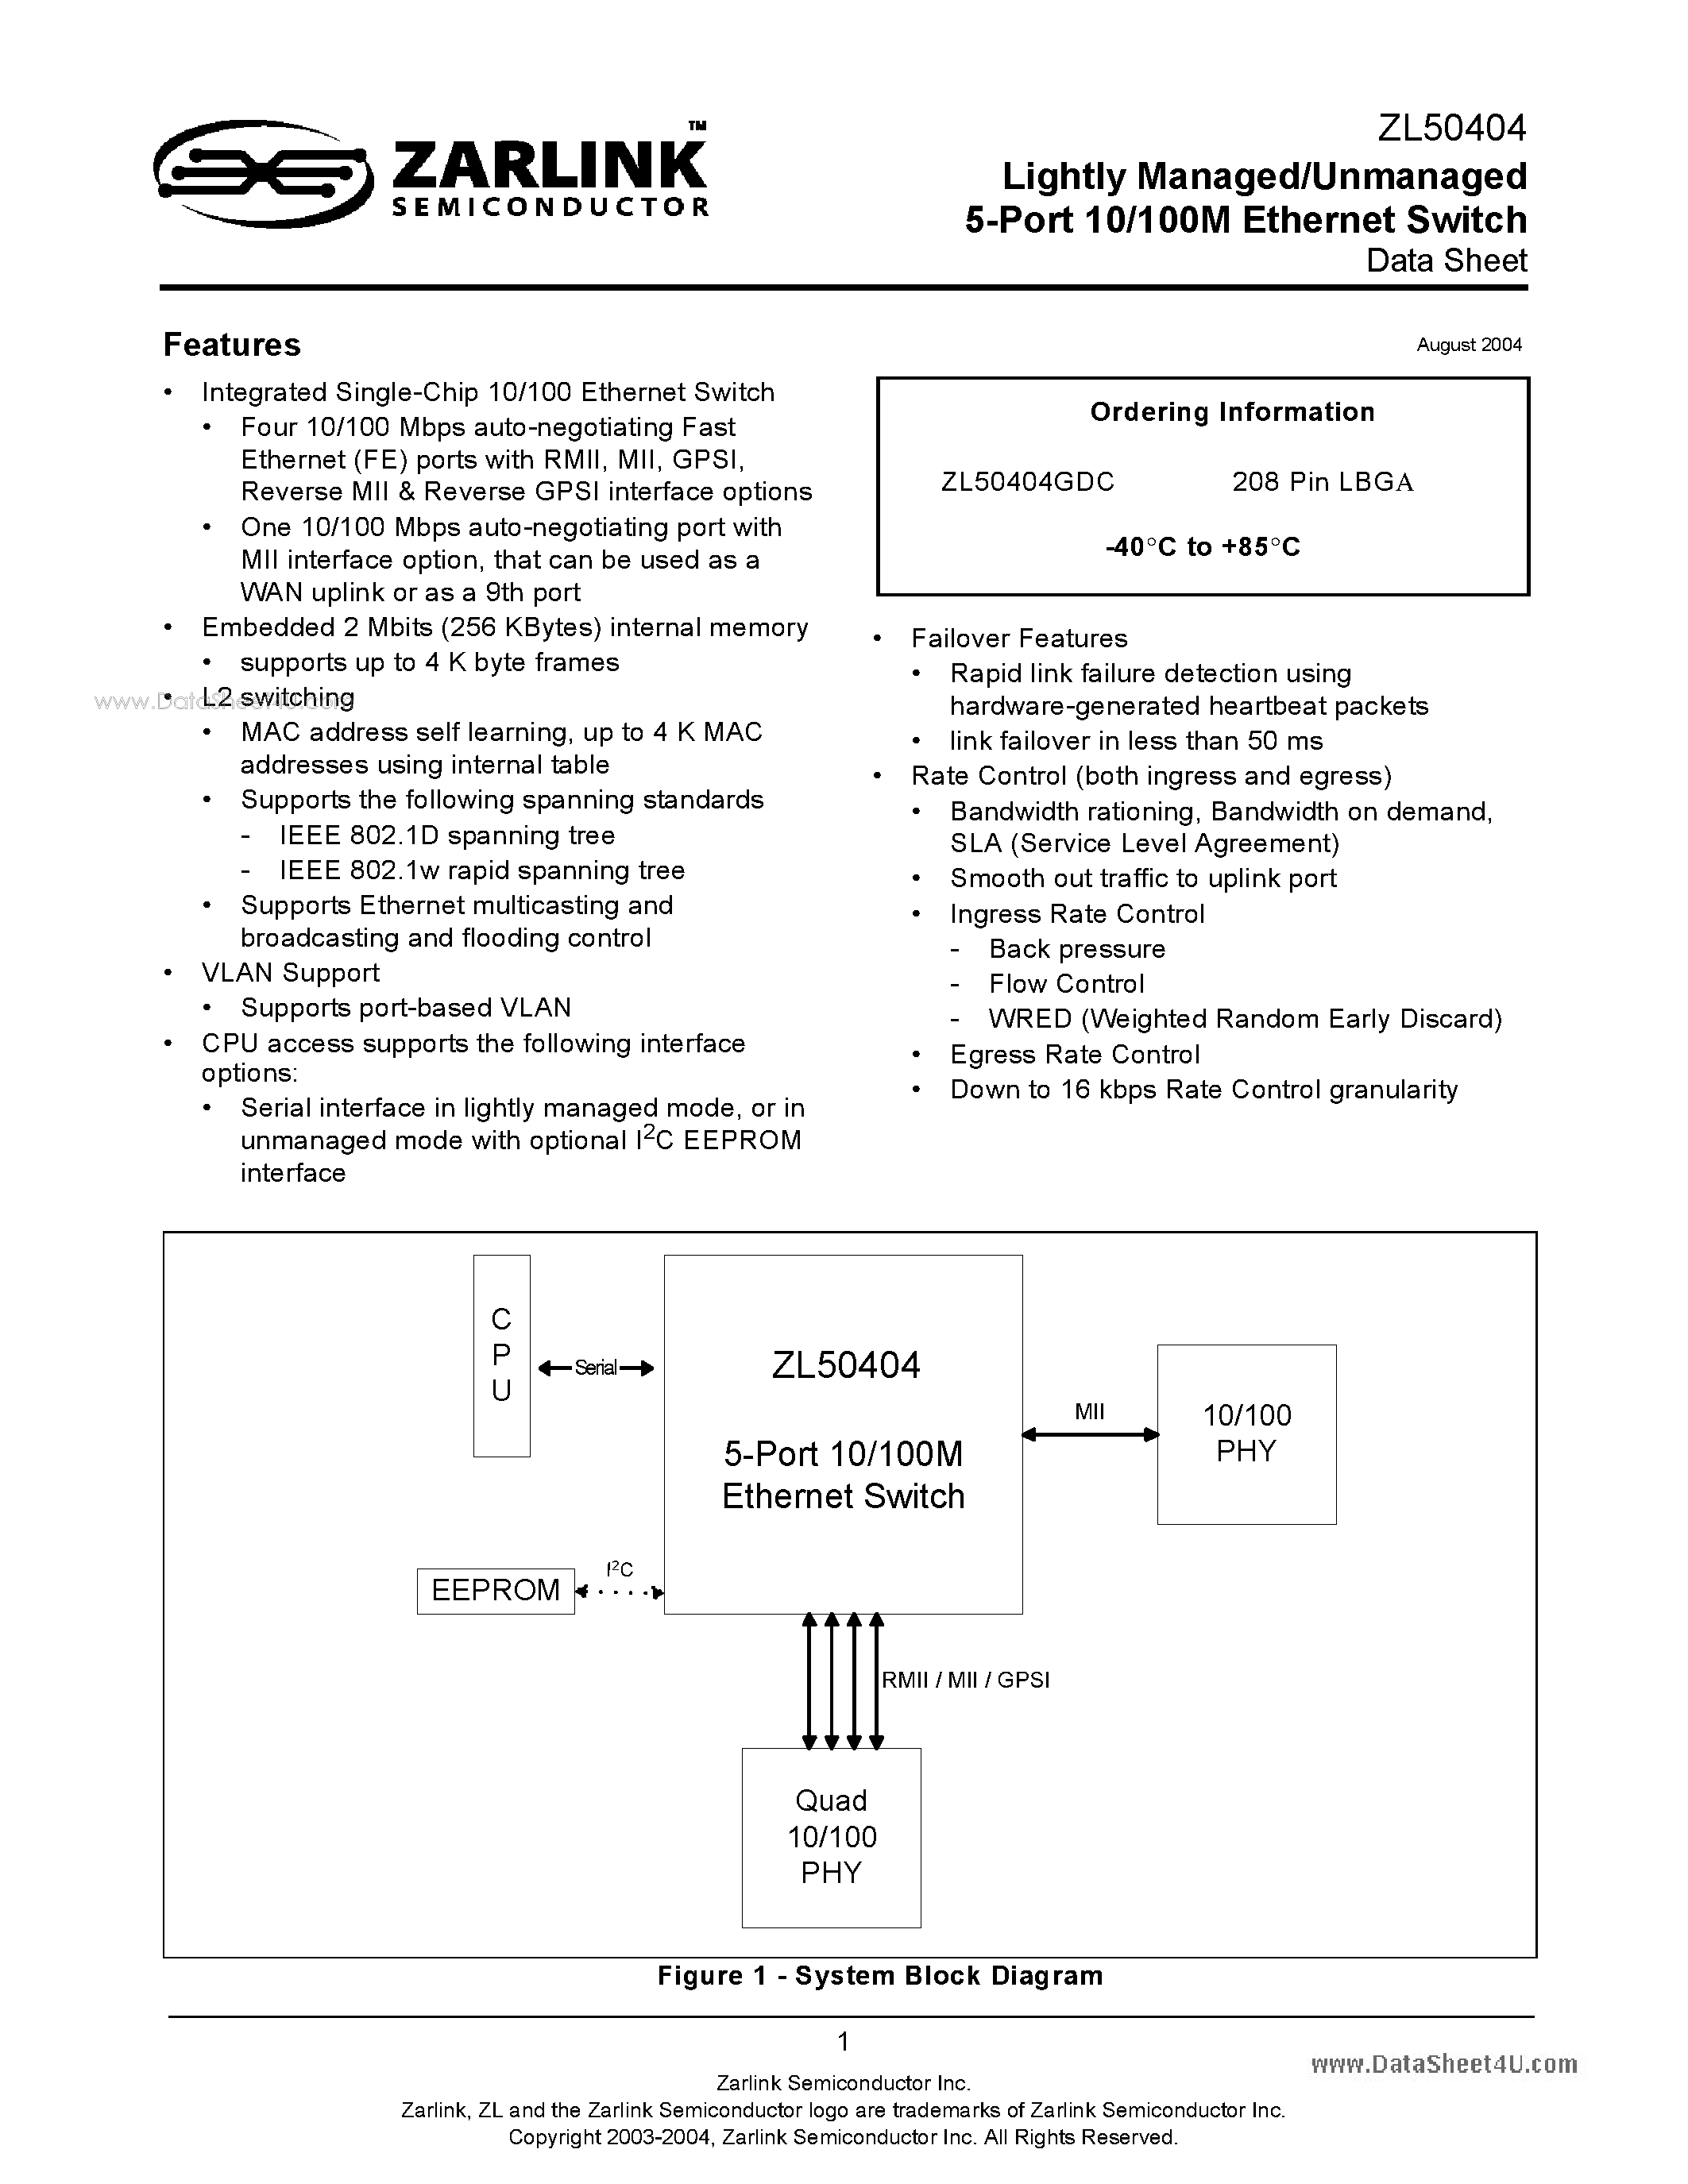 Datasheet ZL50404 - Lightly Managed/Unmanaged 5-Port 10/100 M Ethernet Switch page 1